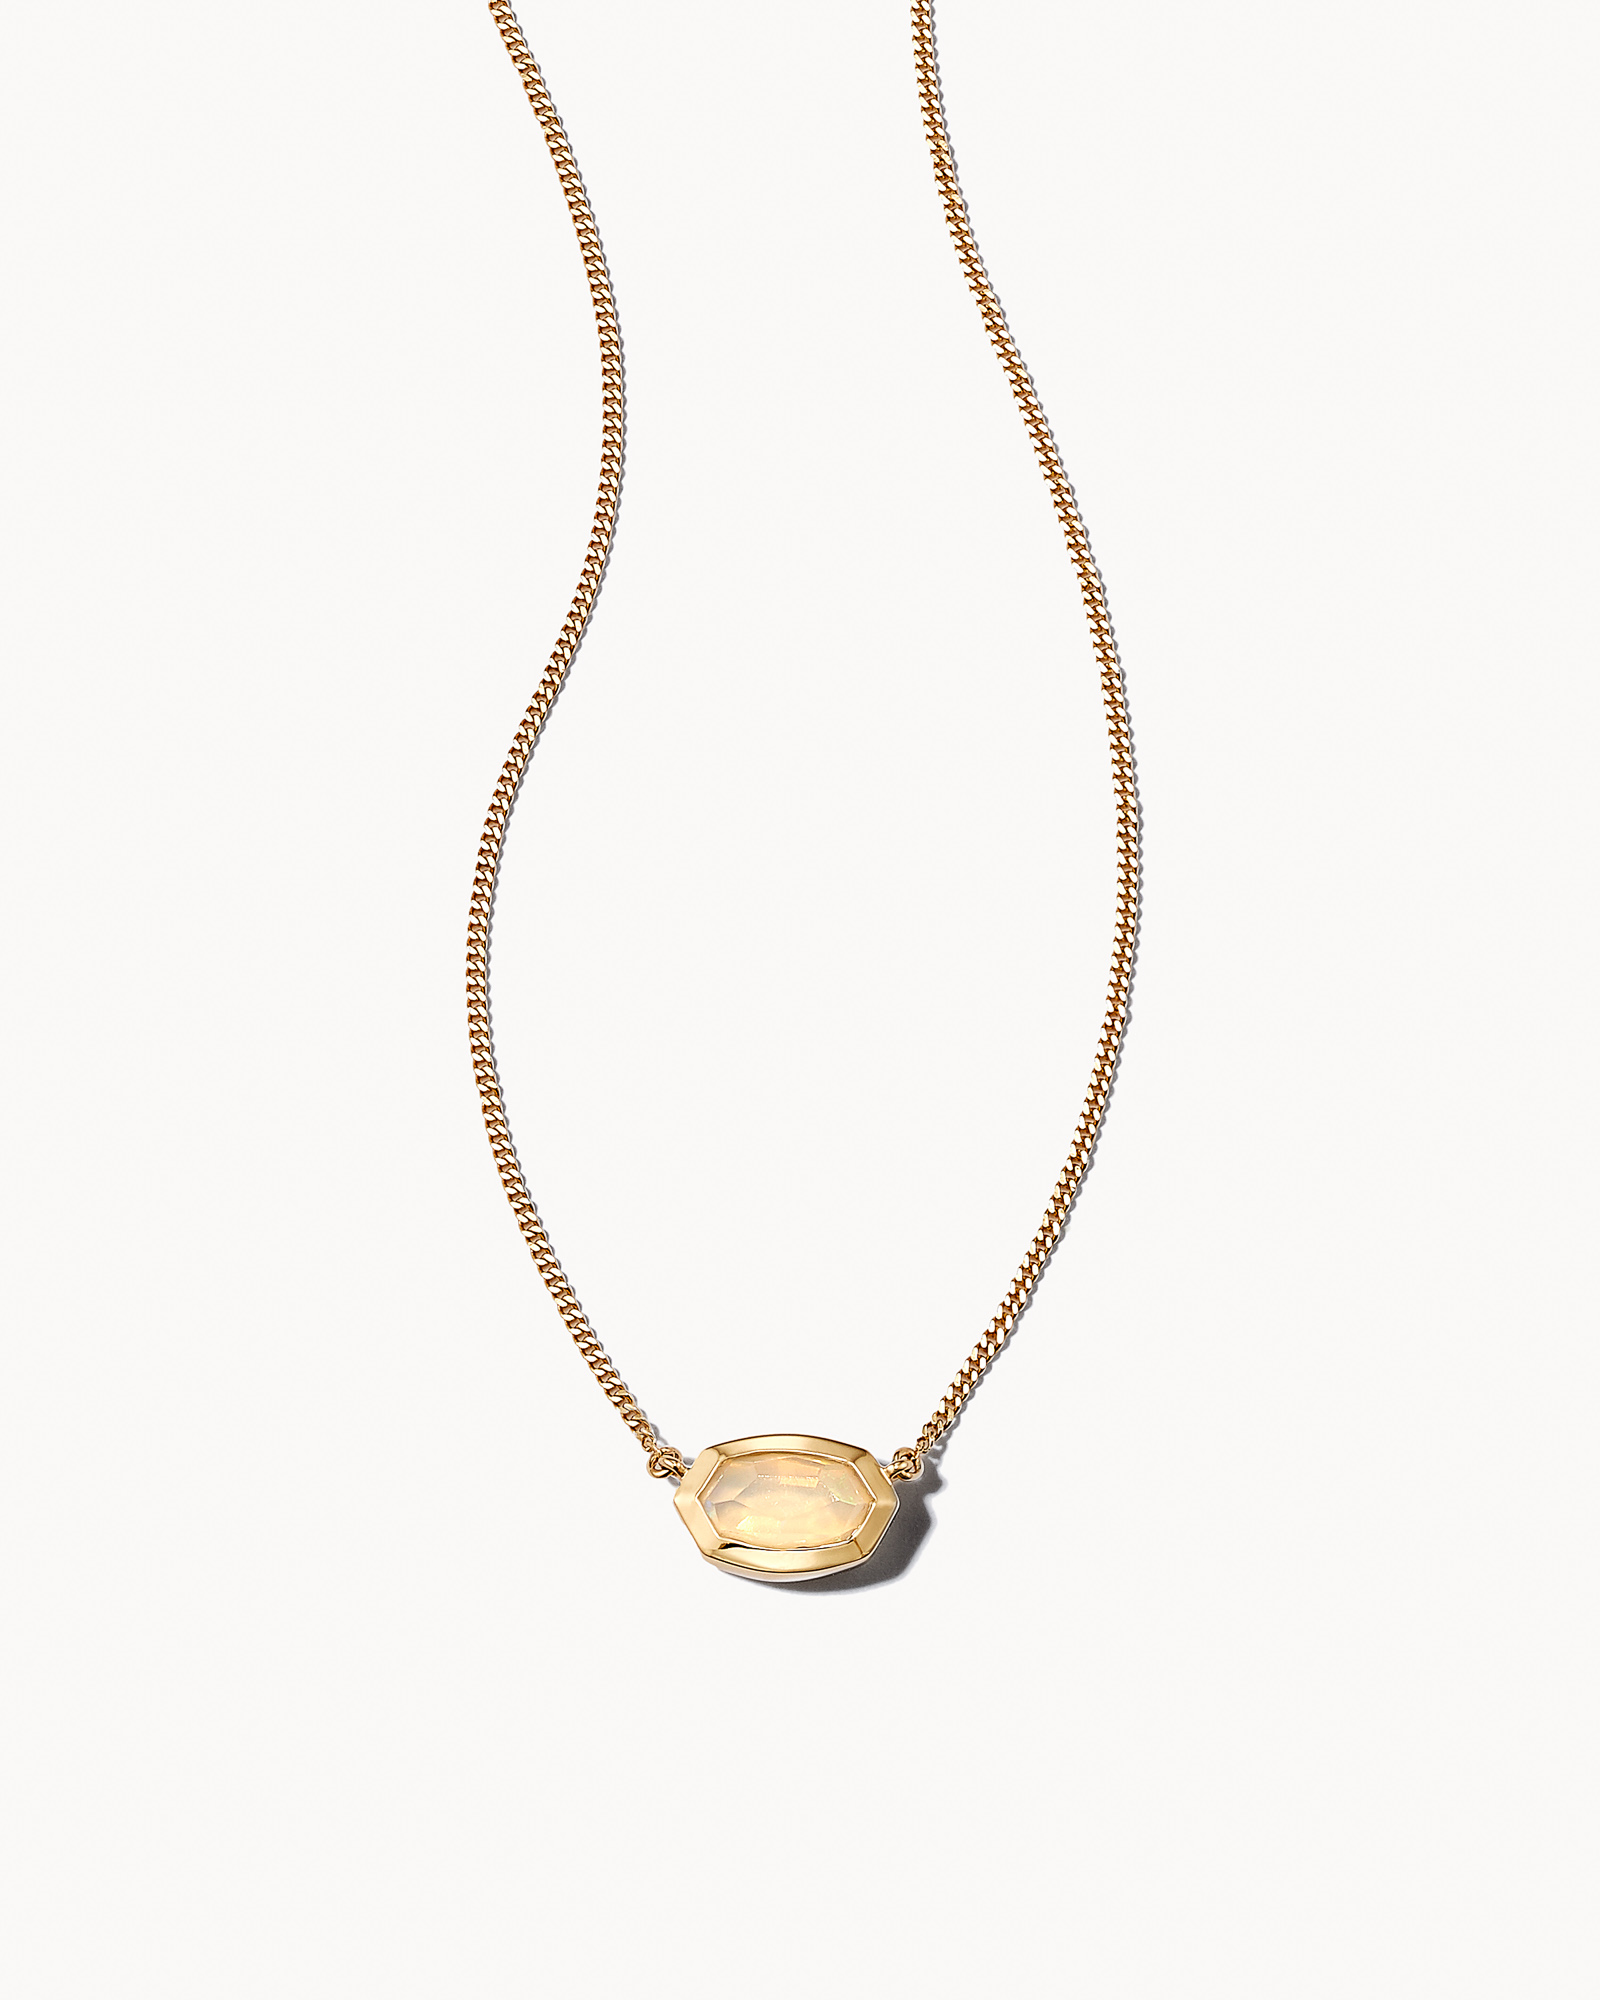 Kendra Scott Cami White Kyocera Opal Gold Necklace RARE | eBay